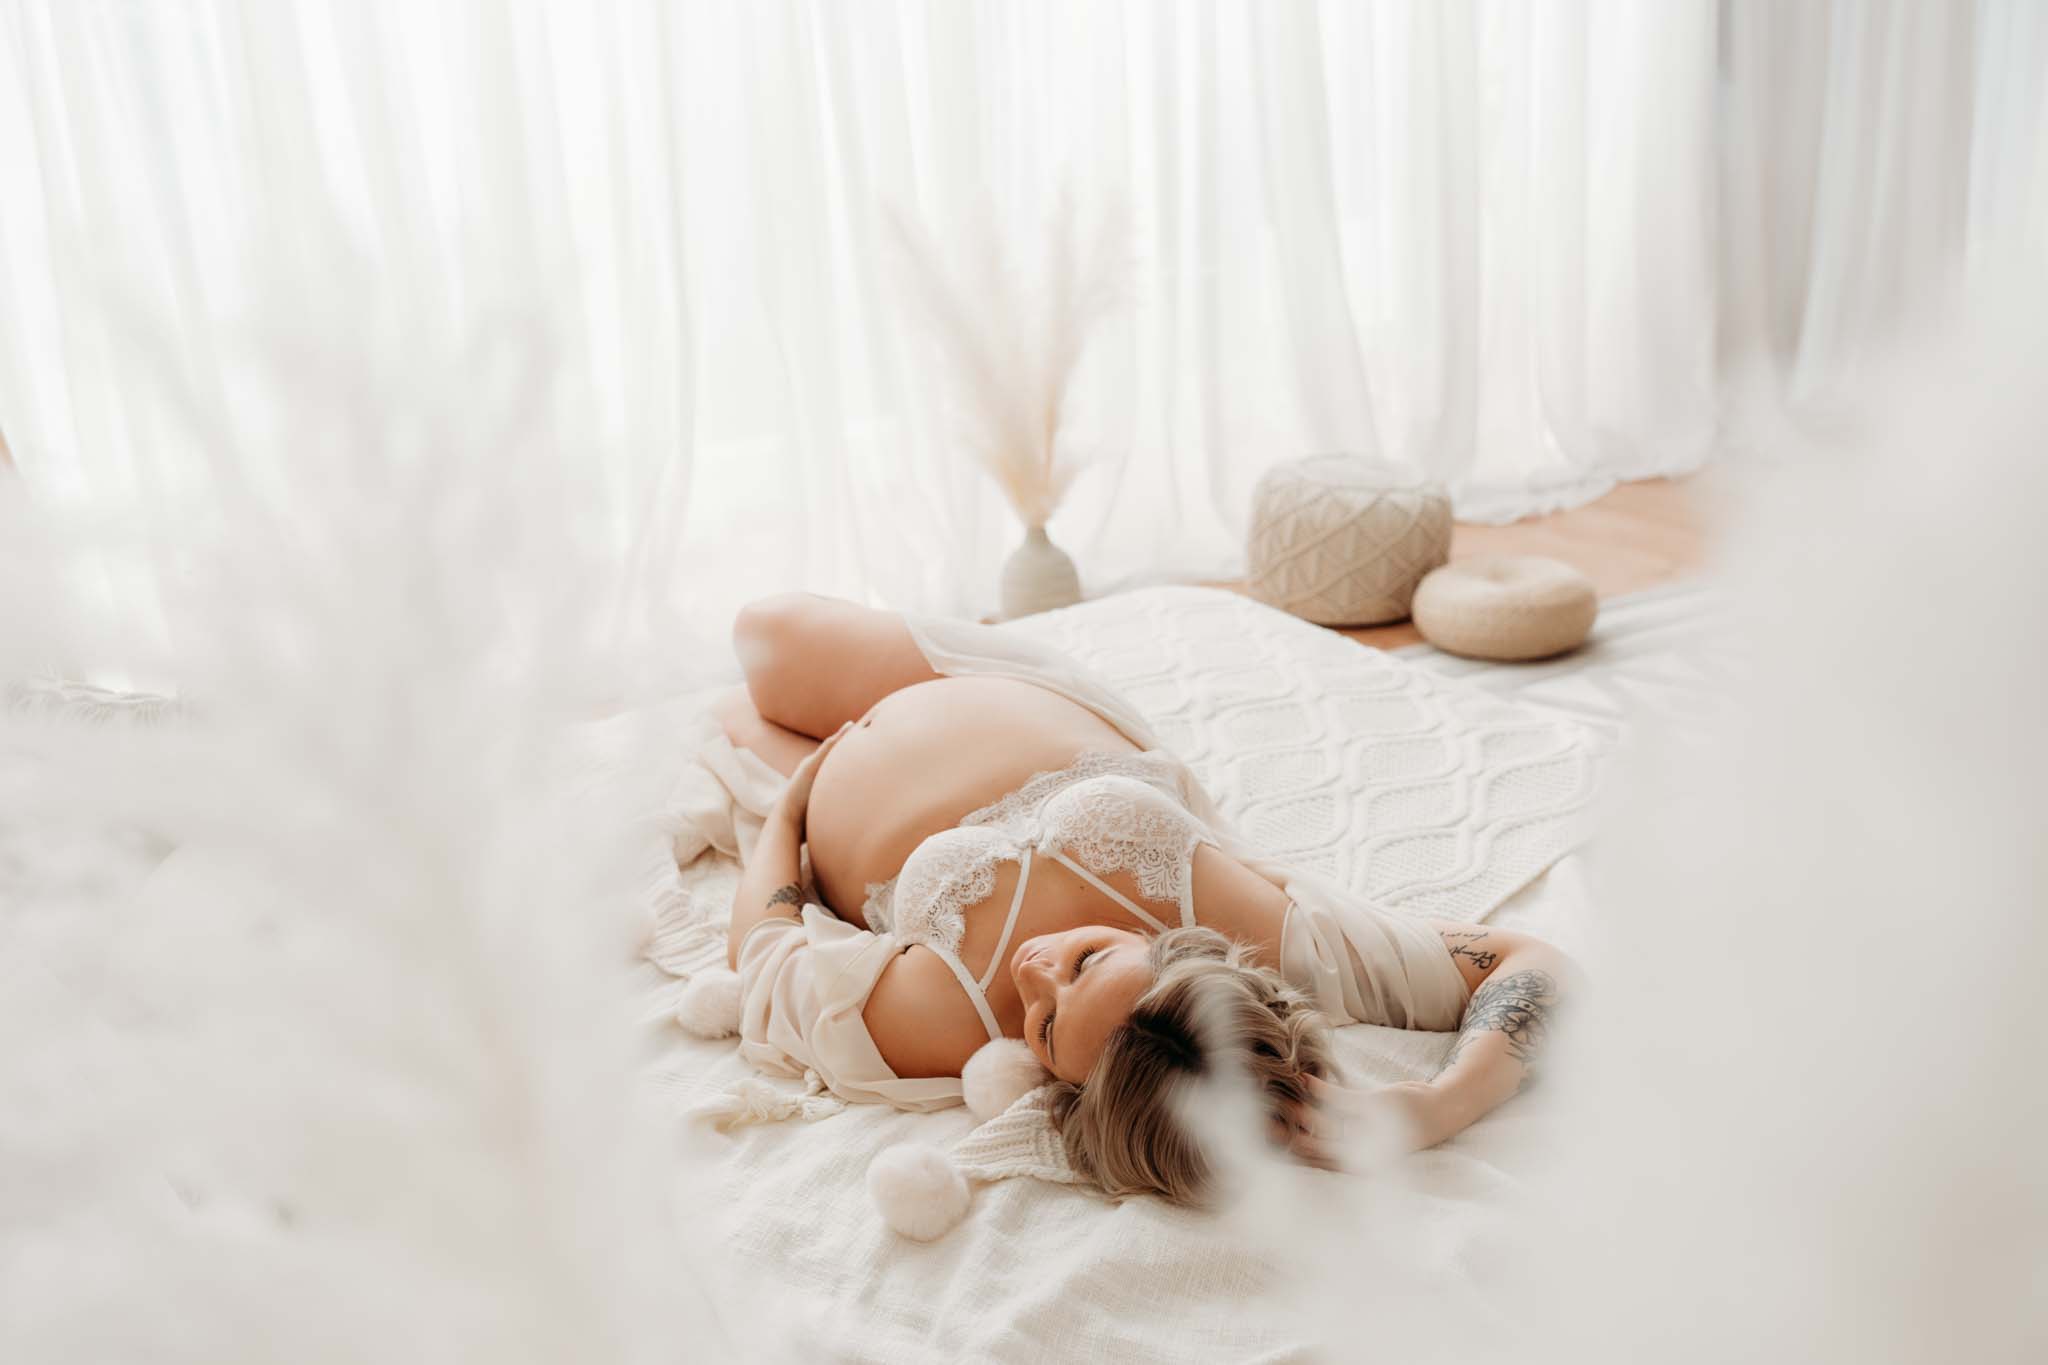 Schwangere Frau räkelt sich am Bett beim Babybauchshooting